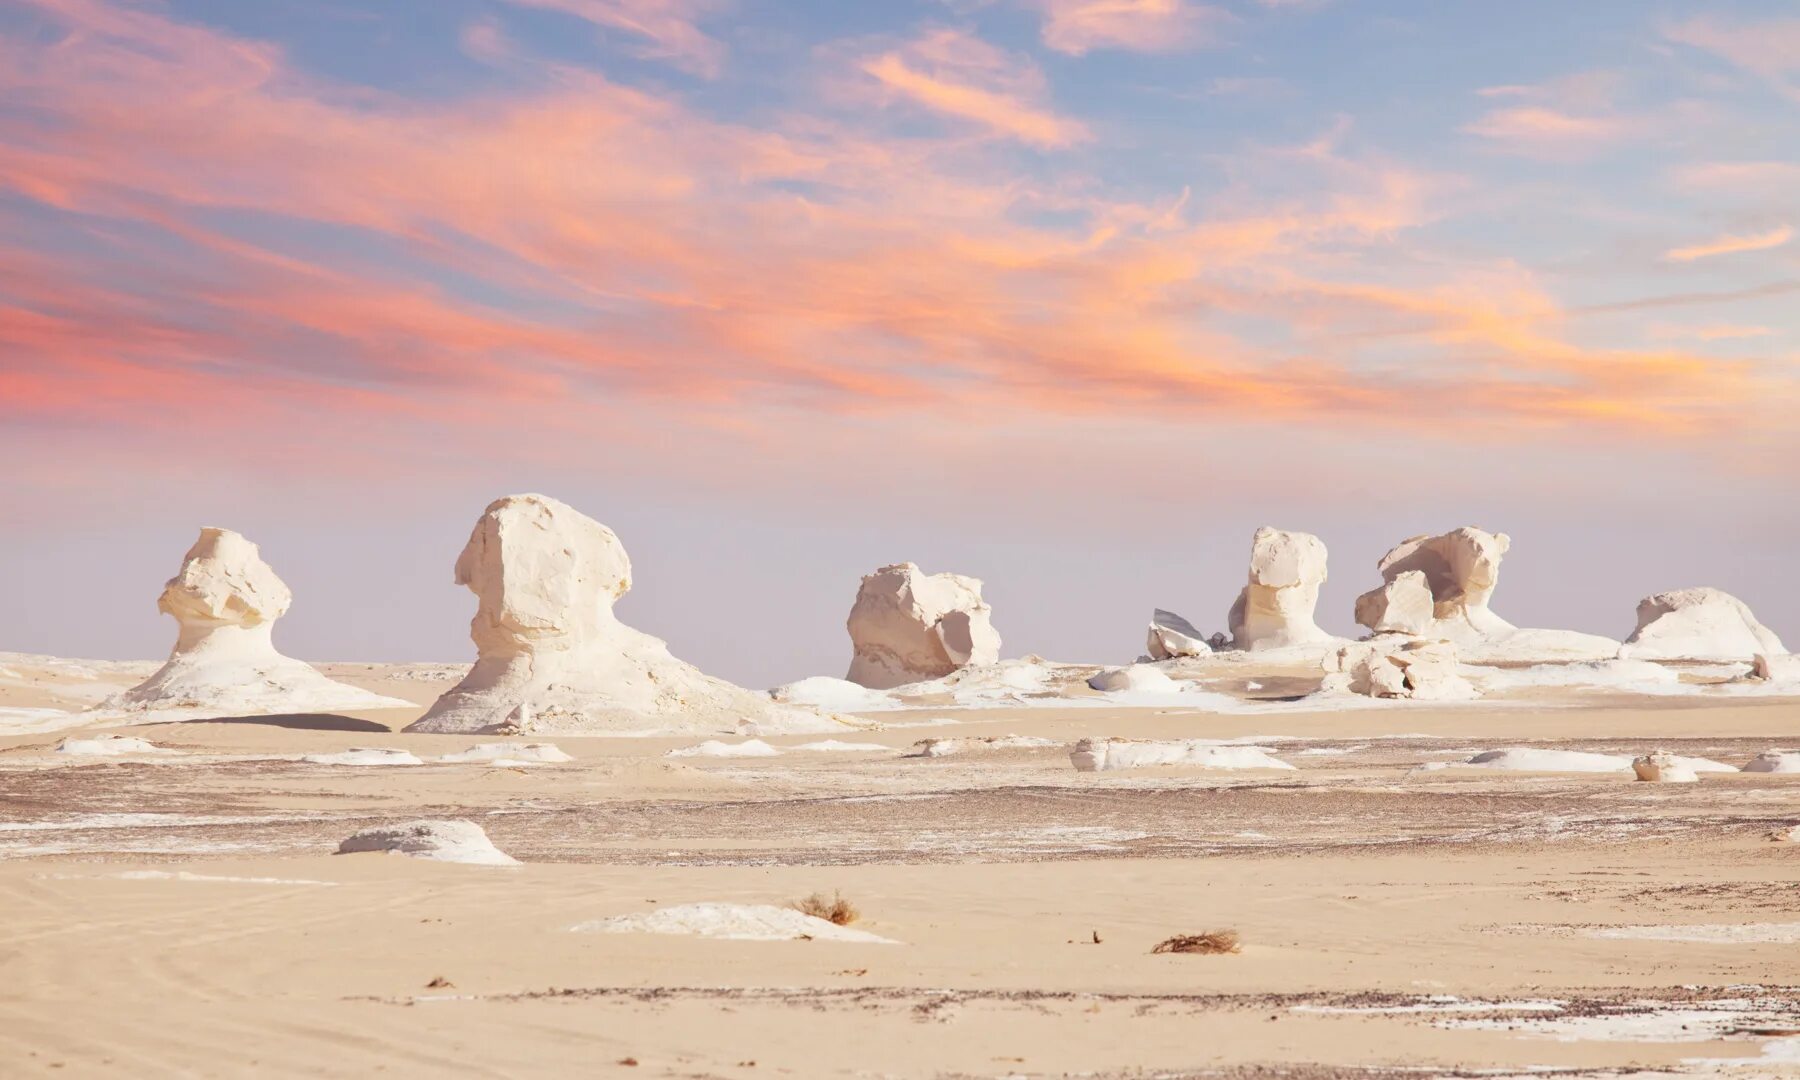 Национальный парк белая пустыня Египет. Белая пустыня, Фарафра, Египет.. Сахара-Эль-Бейда белая пустыня. Оазис белая пустыня Египет.